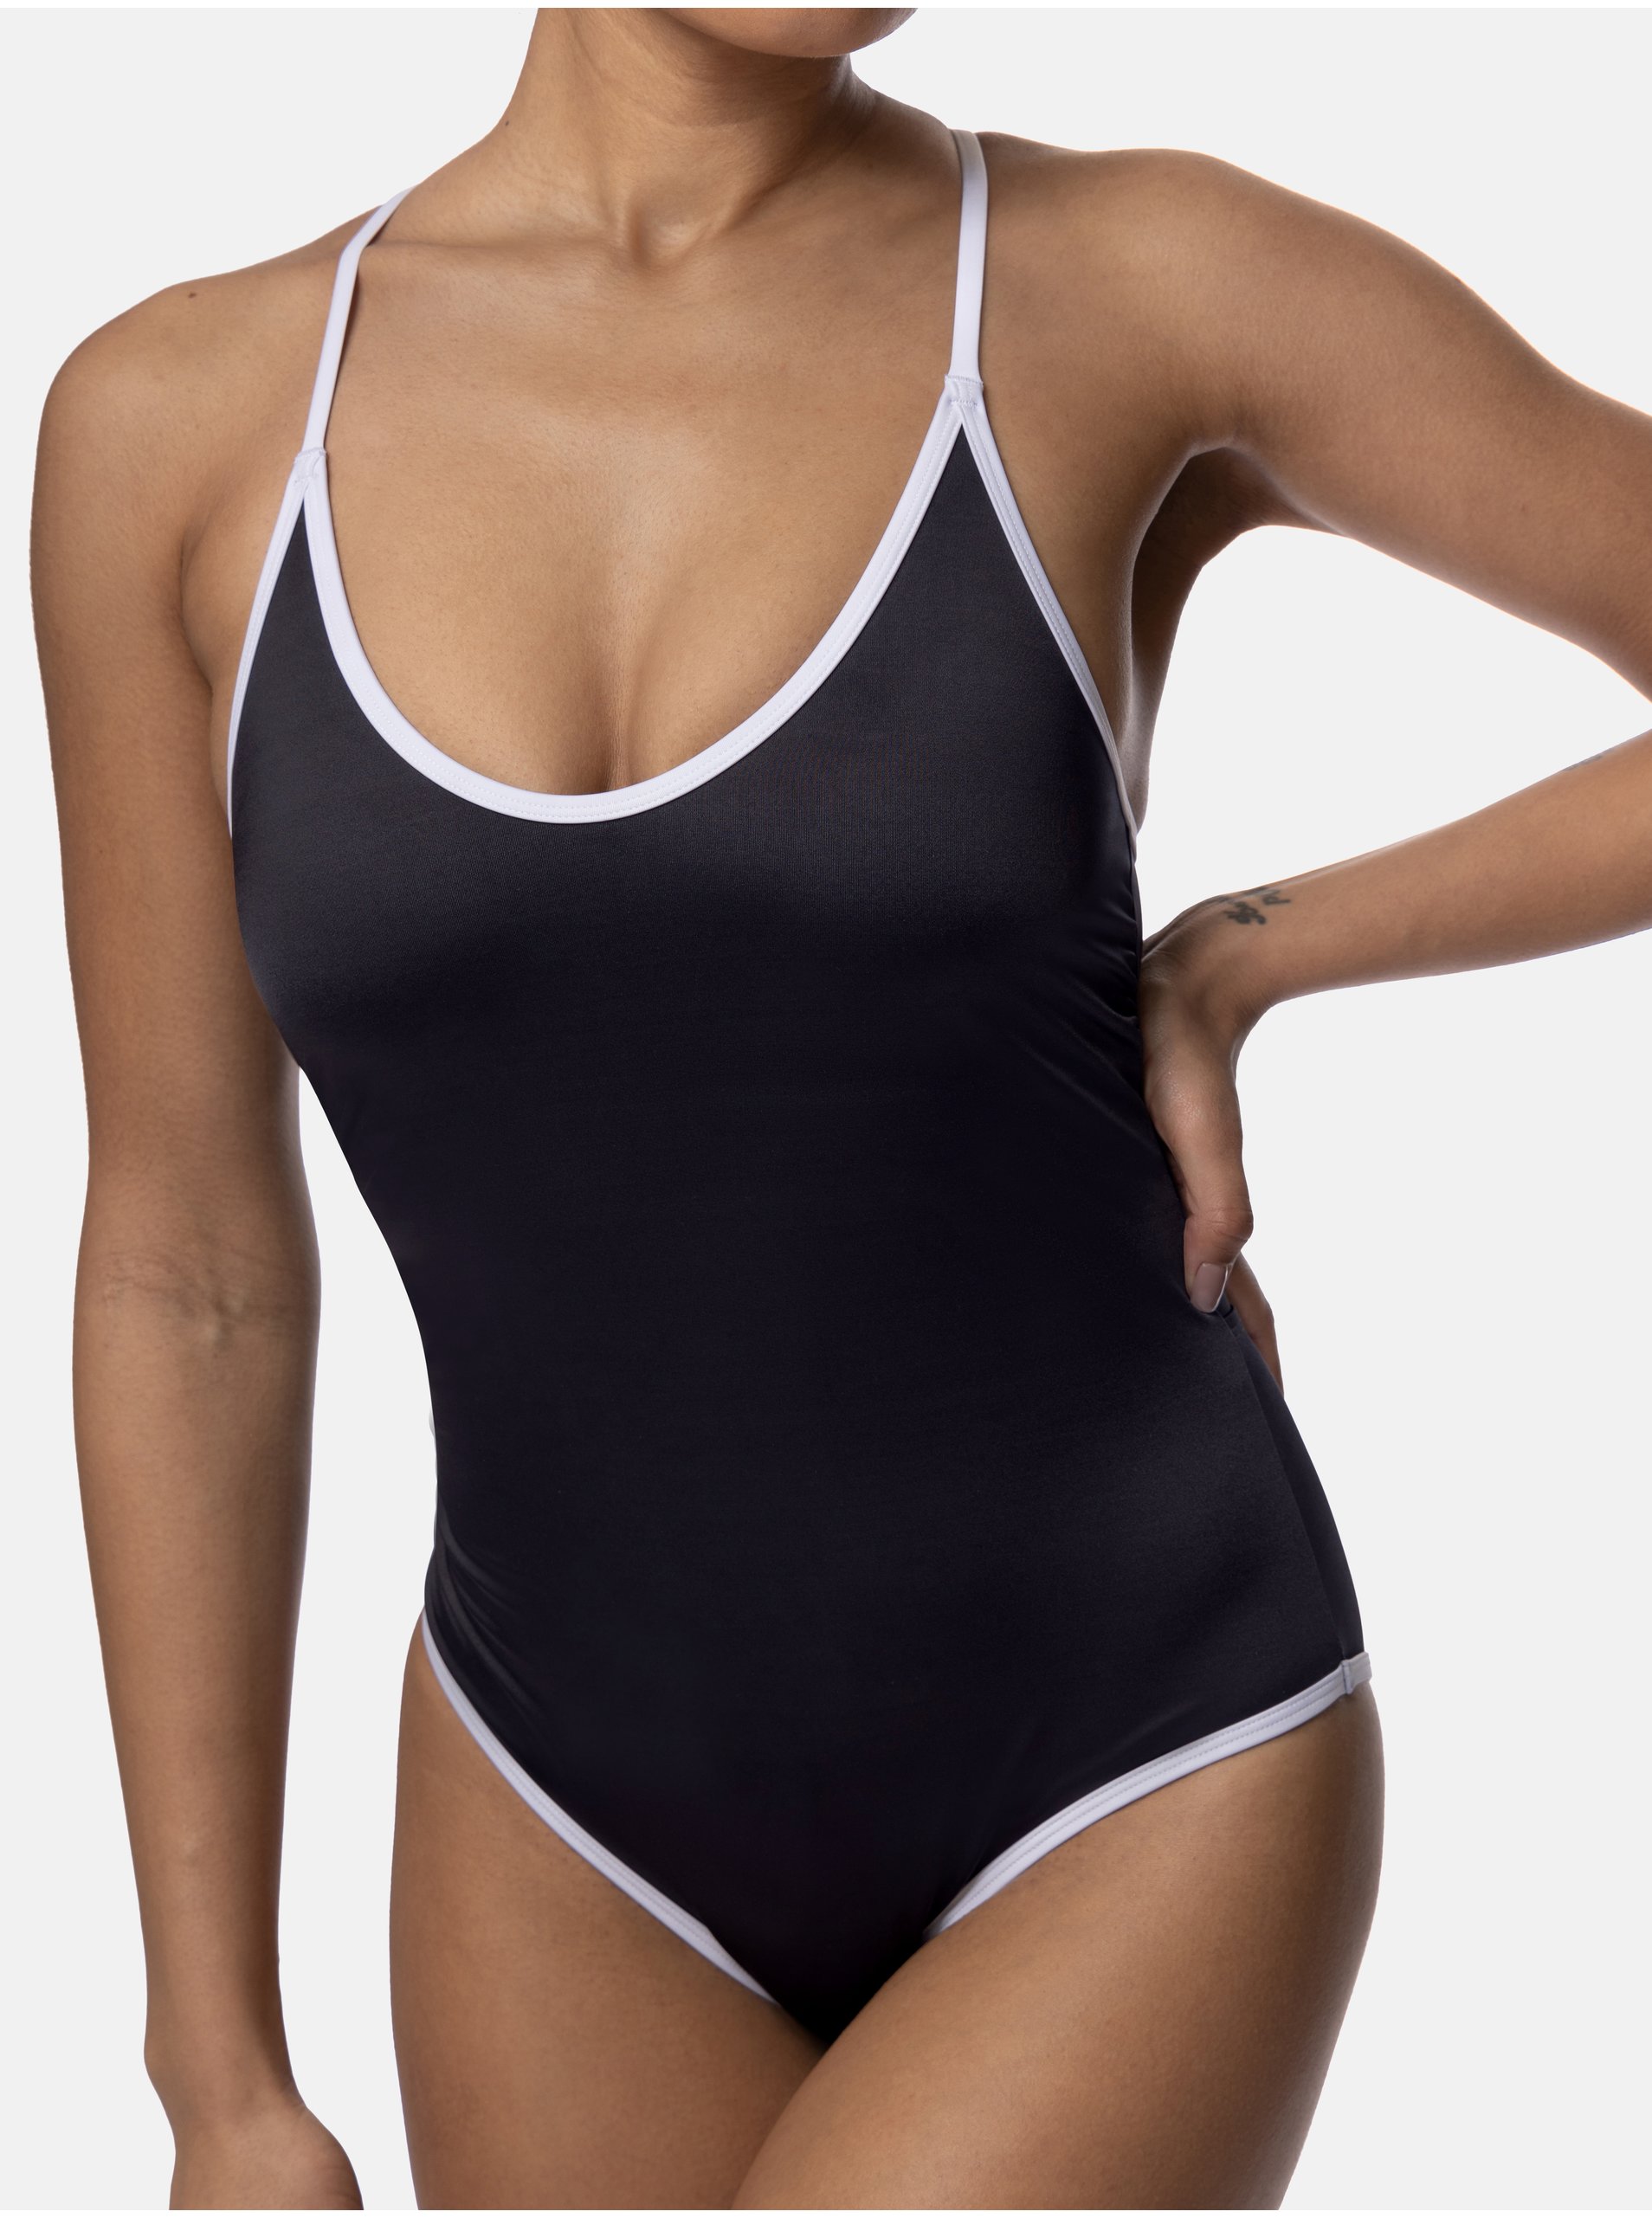 E-shop Čierne dámske jednodielne plavky DORINA Bandol